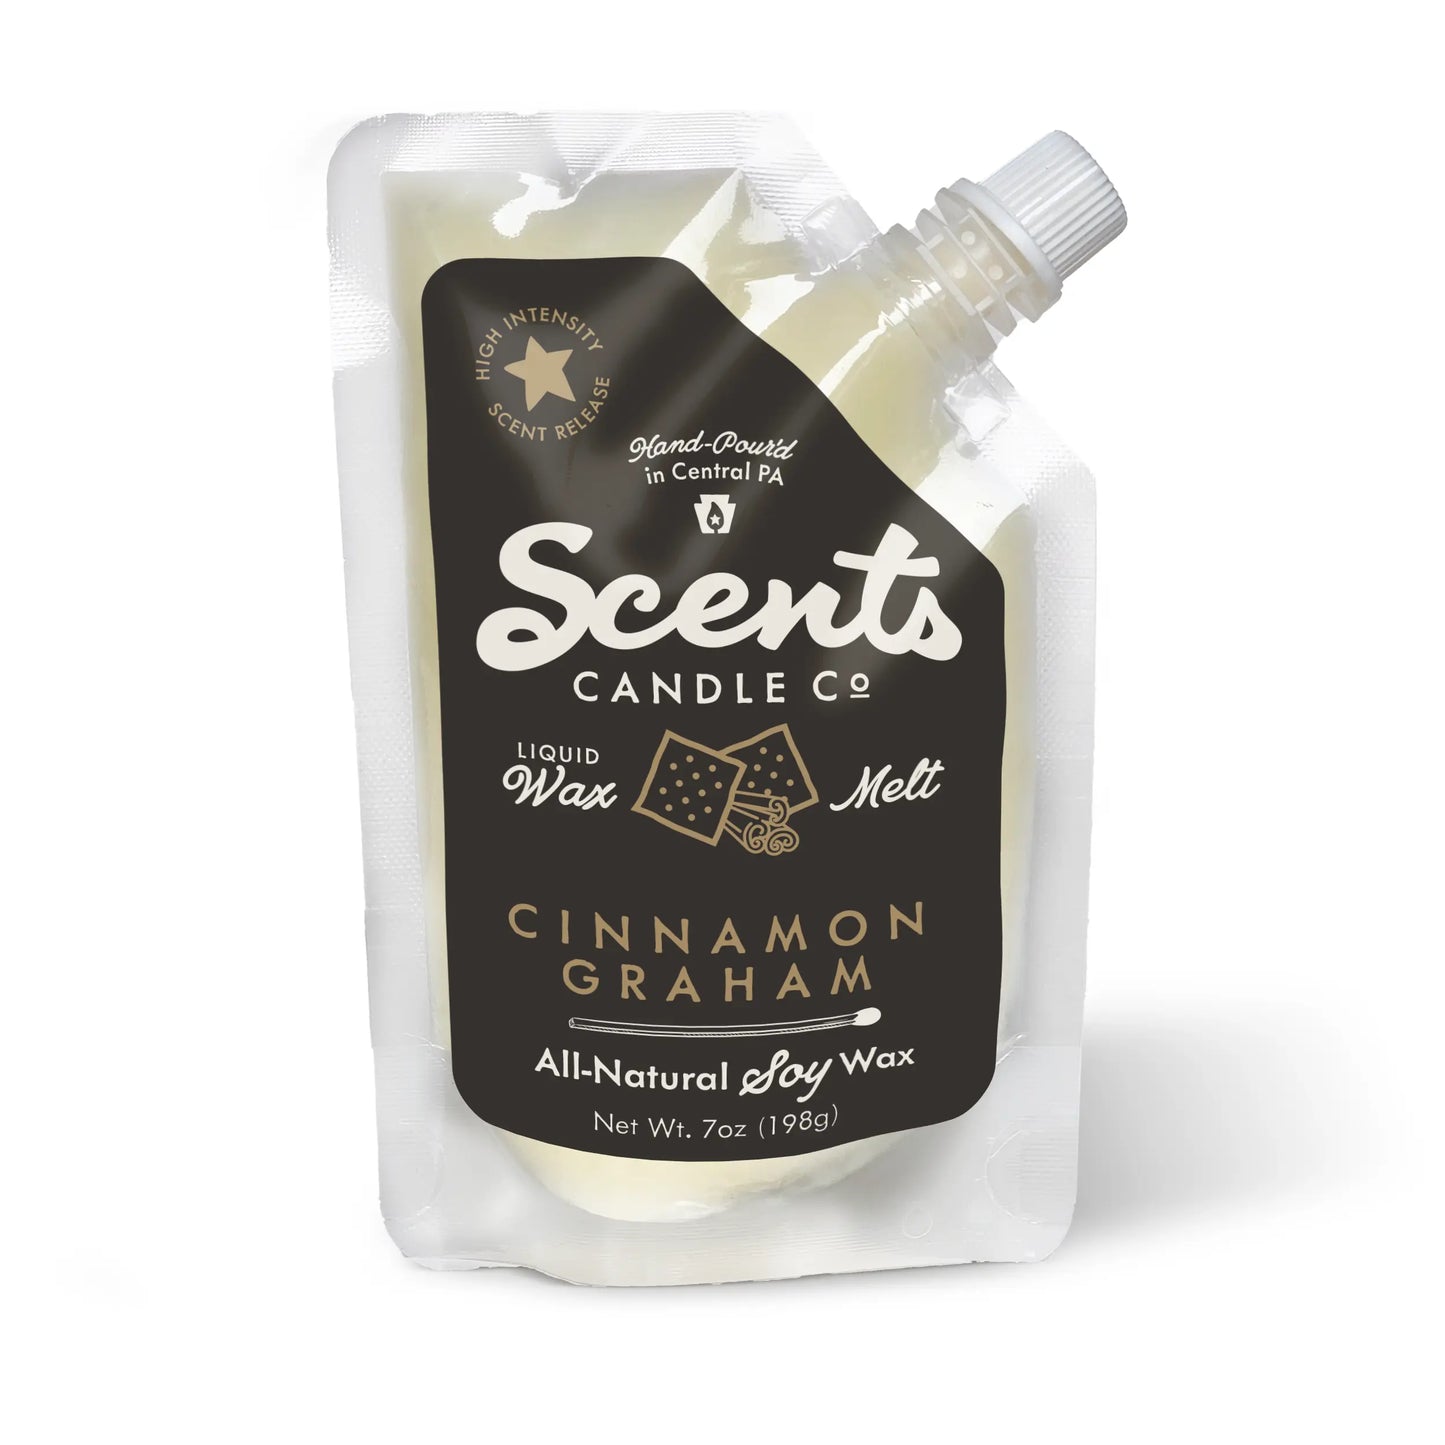 Scents Candle Co. Cinnamon Graham Liquid Wax Melt